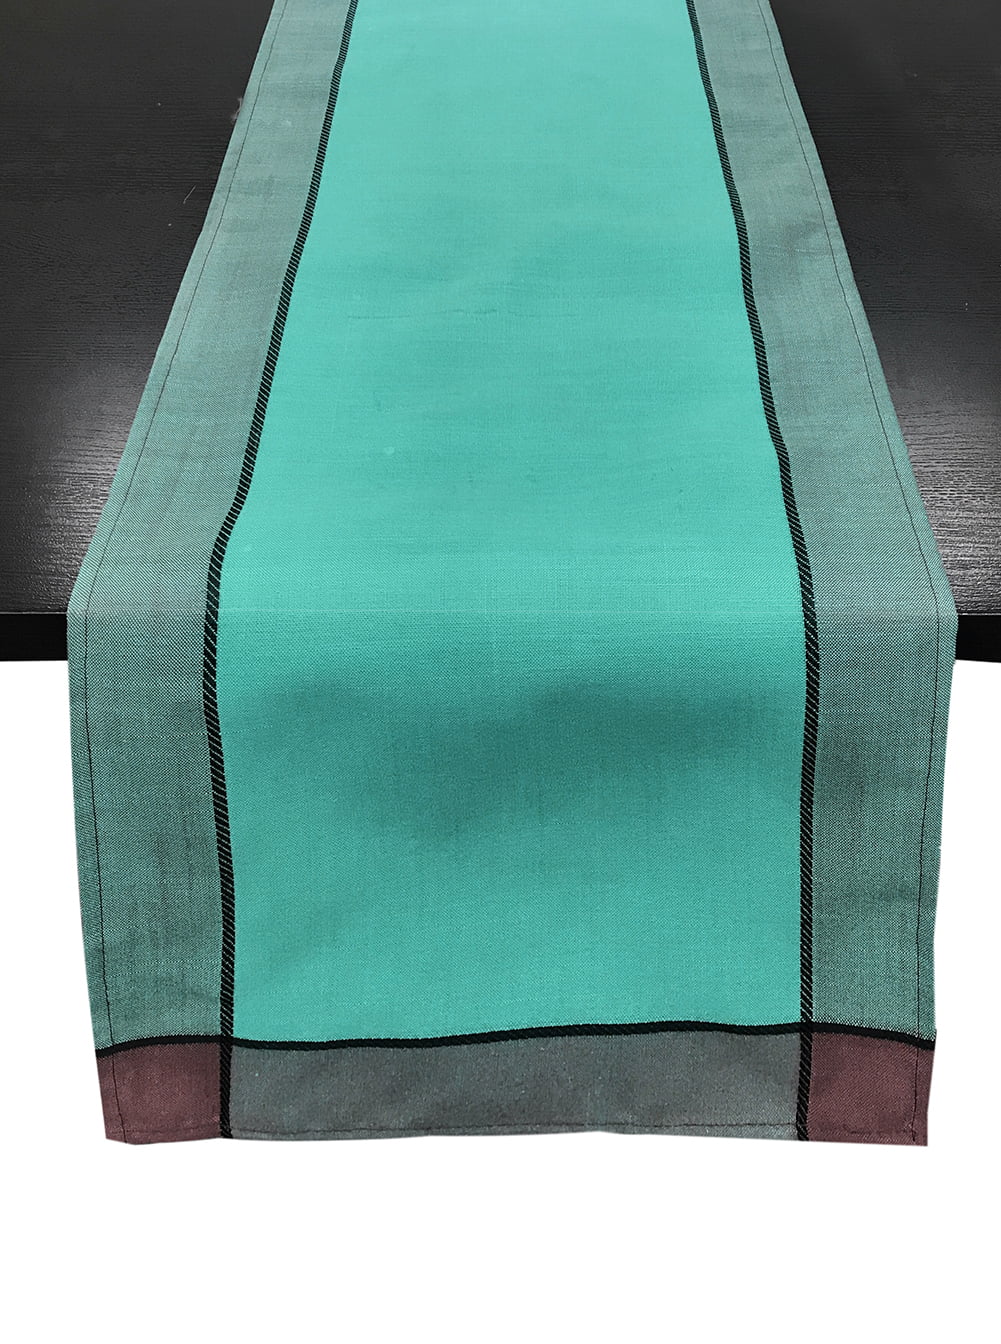 Fennco Styles Maison Beaujard Provencal Design Table Dinner Cloth Napkin 20x20 Napkin-Set of 4, Sea Green